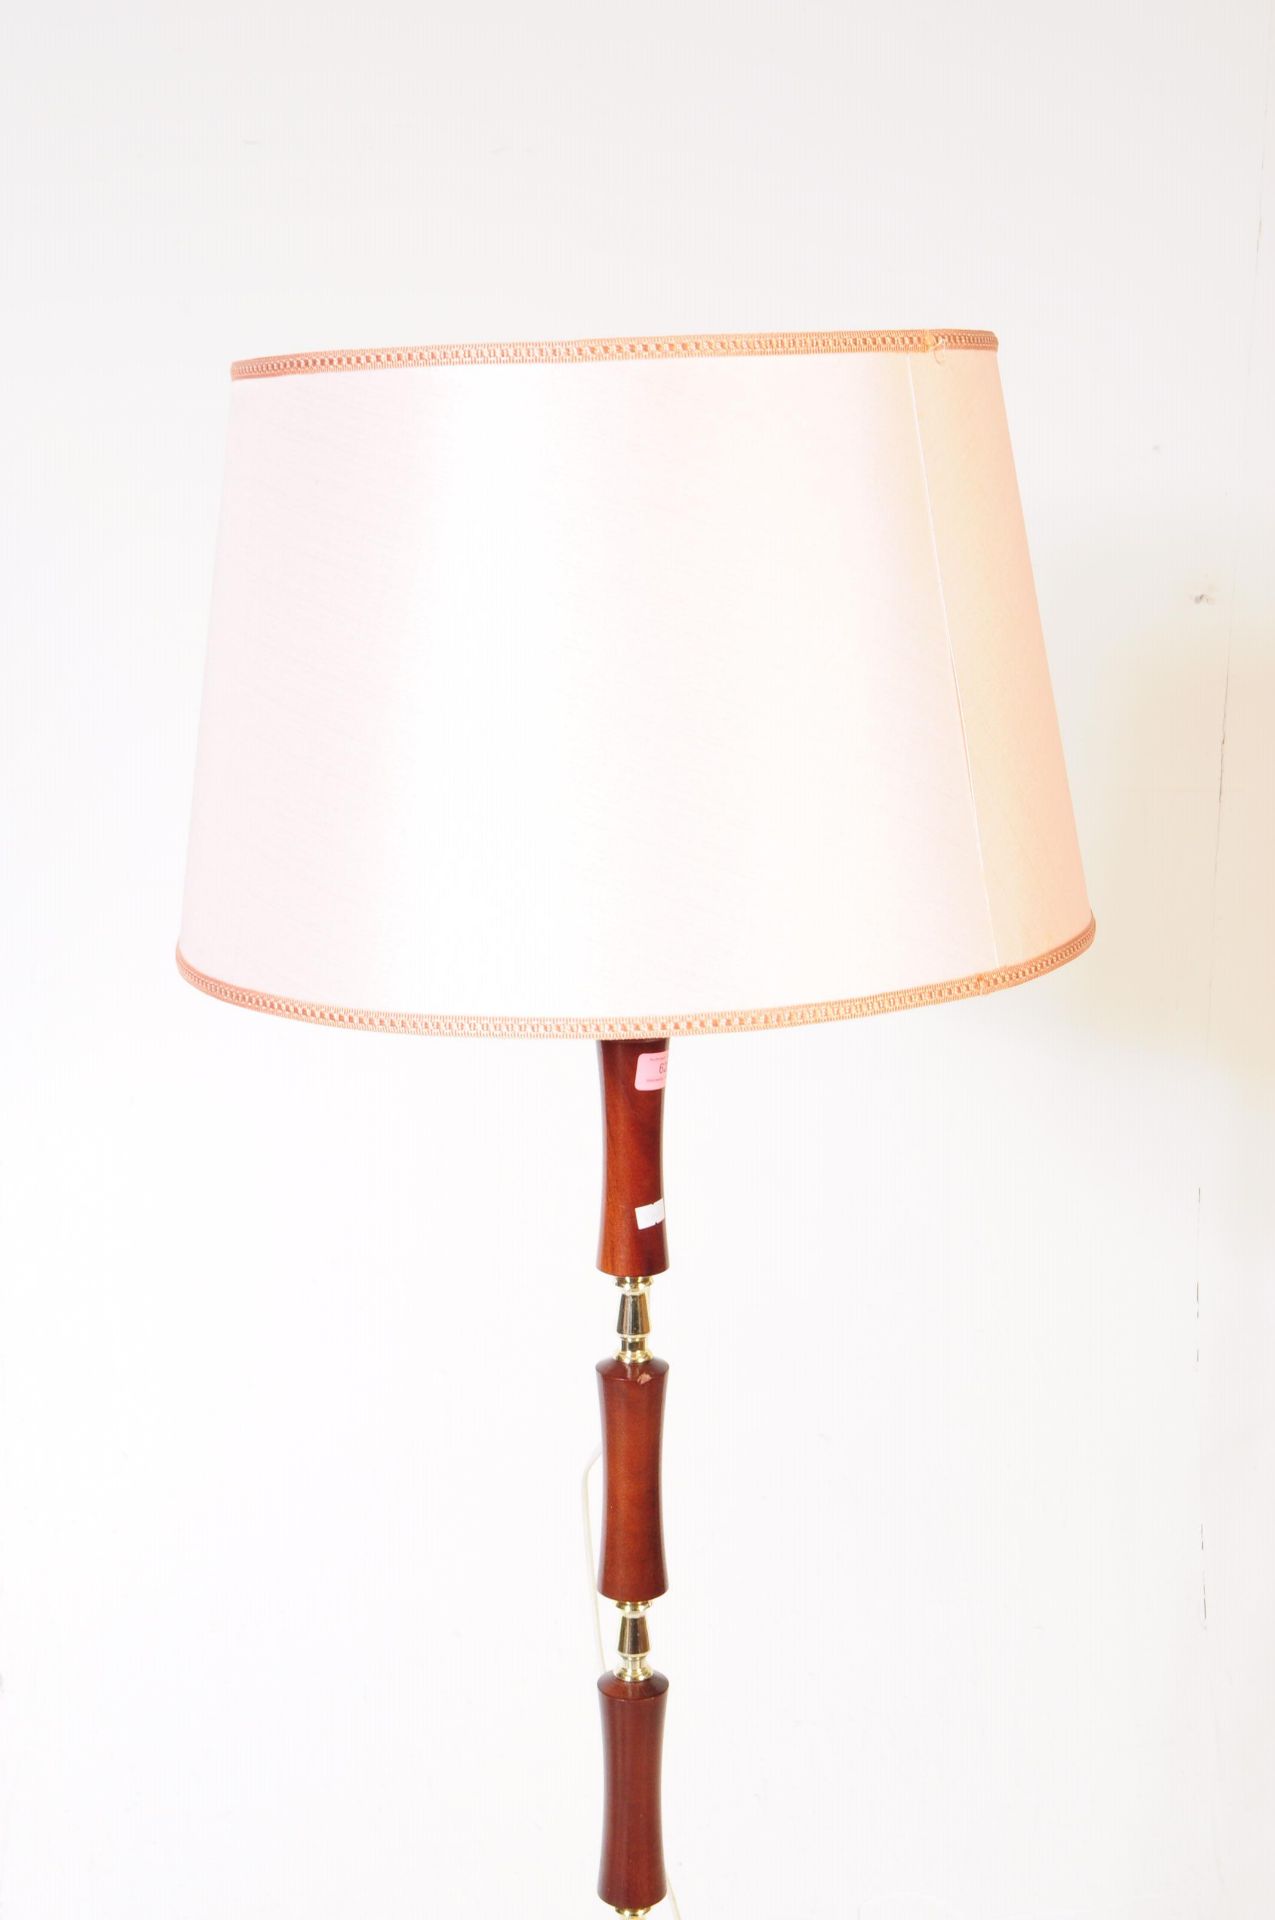 BRITISH MODERN DESIGN - MID CENTURY STANDARD LAMP - Image 4 of 4